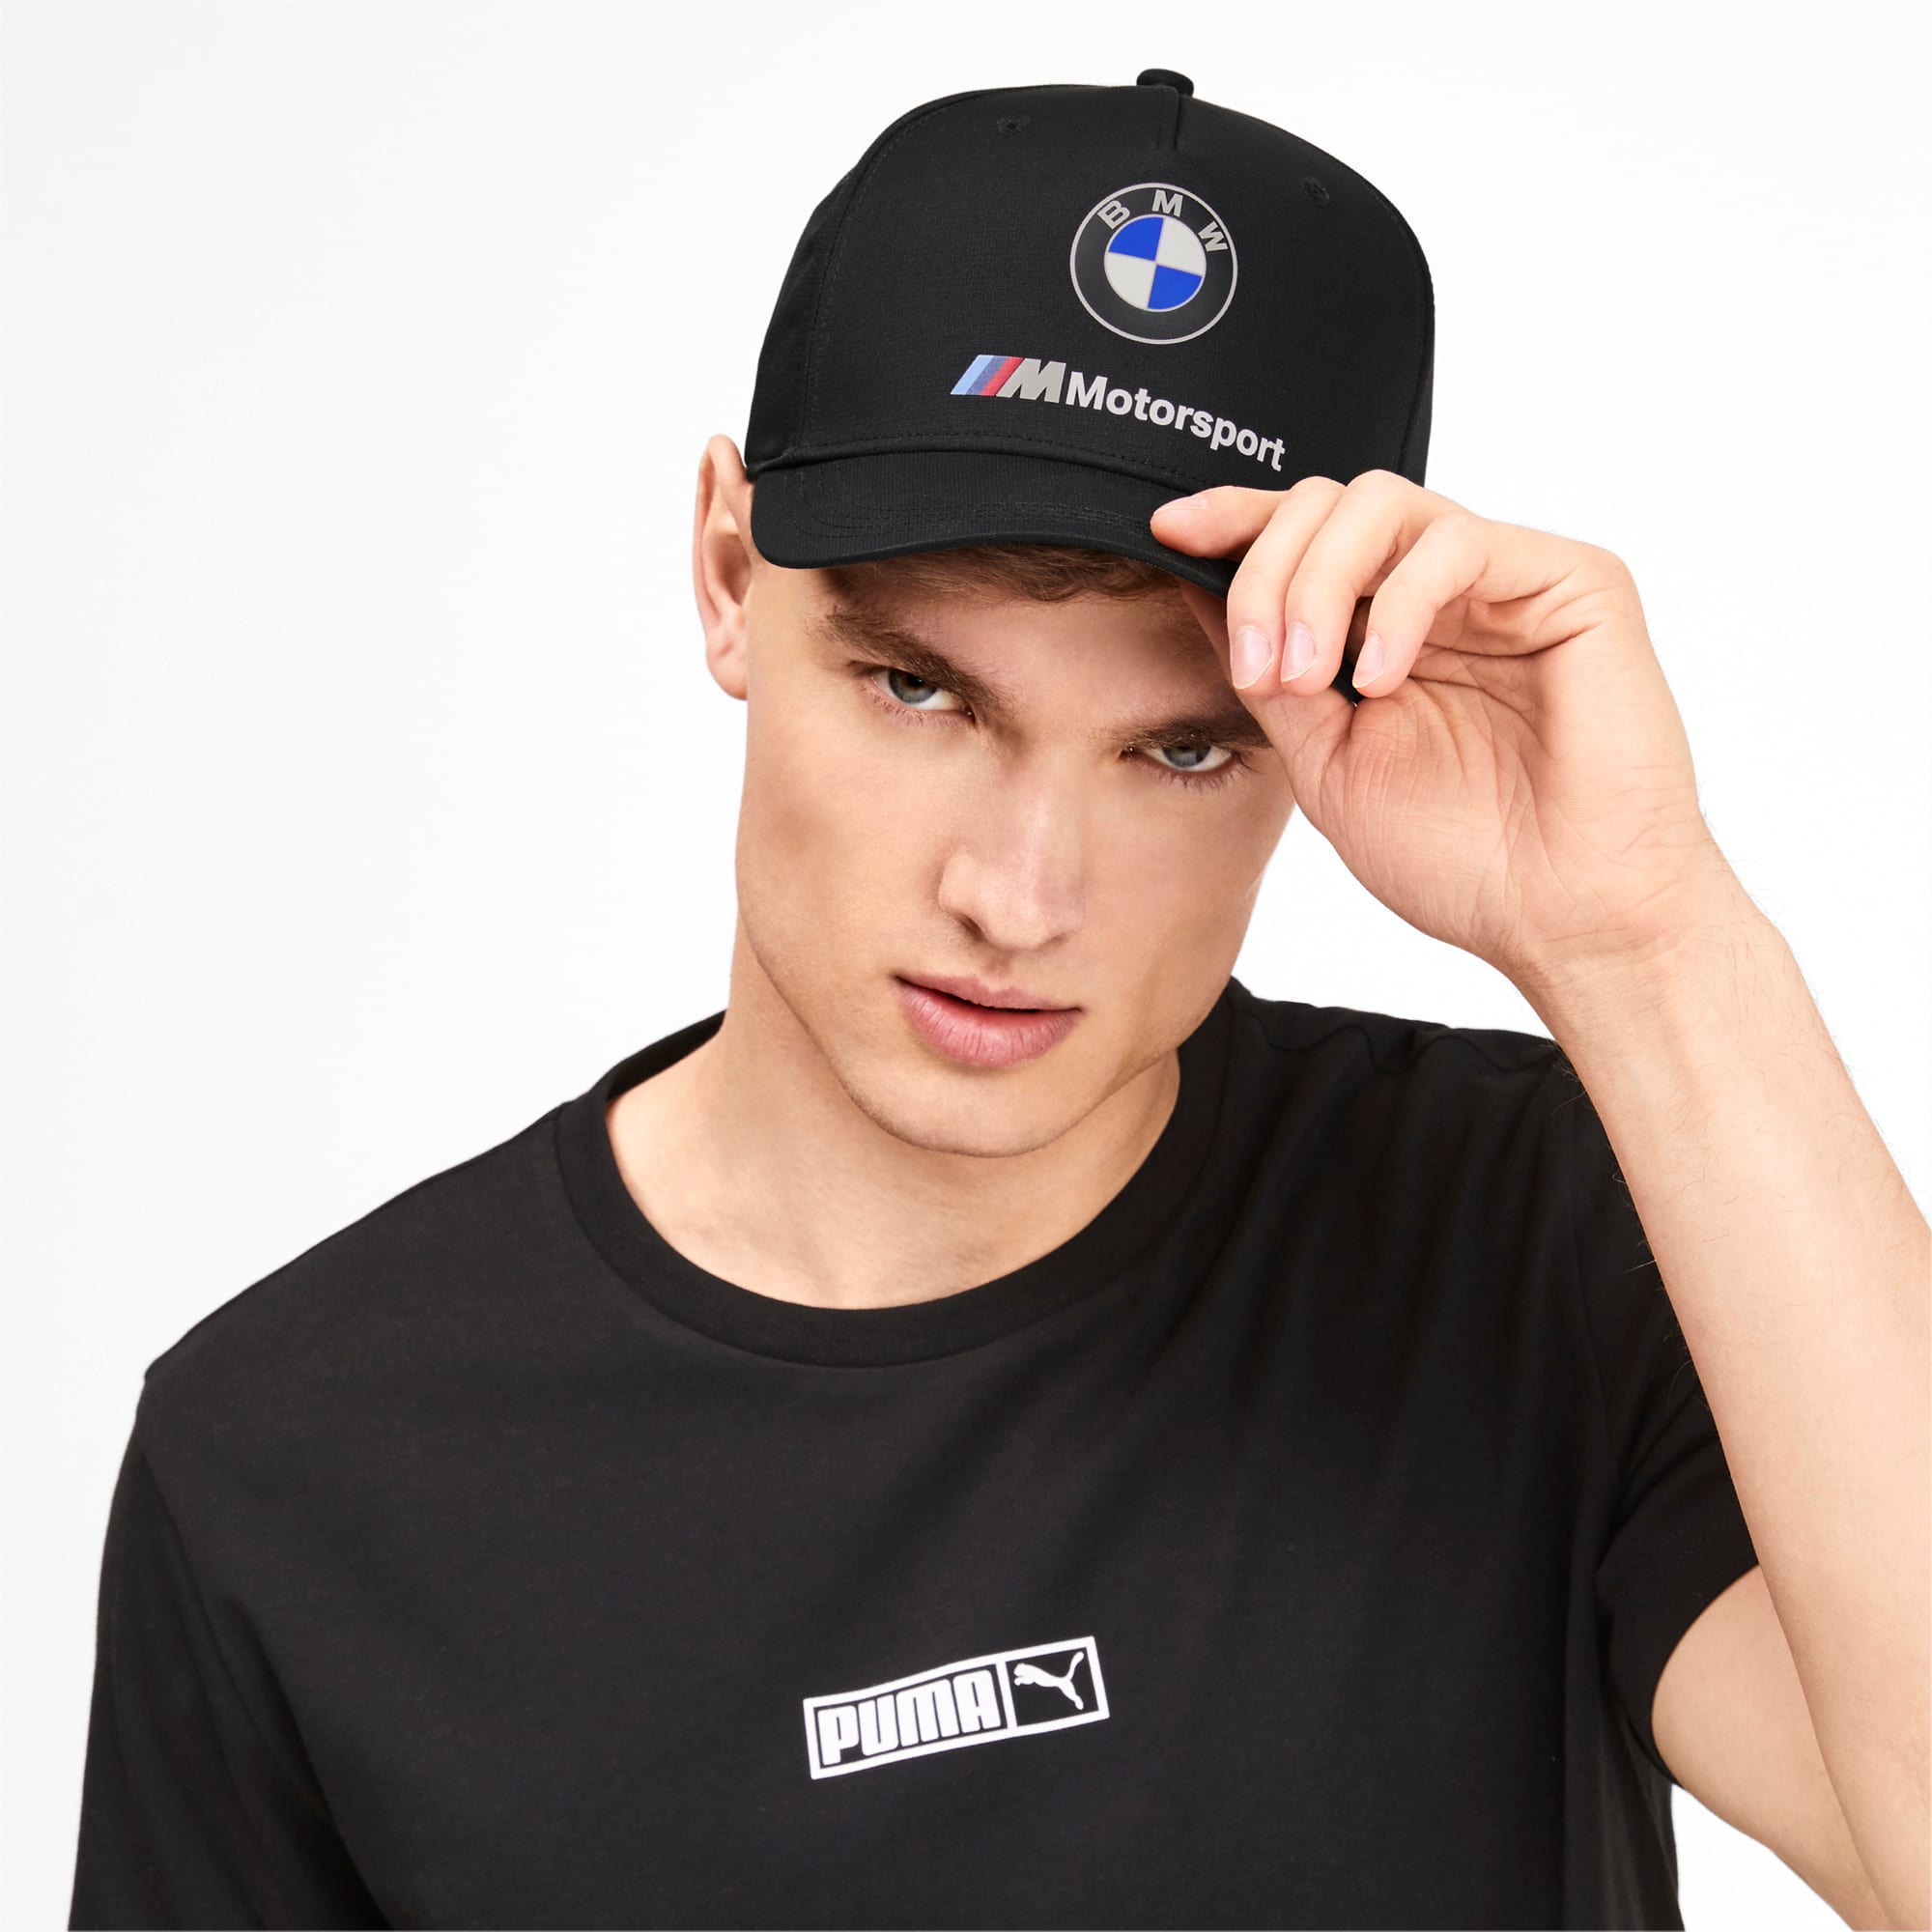 BMW Motorsport Collector's Cap  Ankle boots men, Hats for men